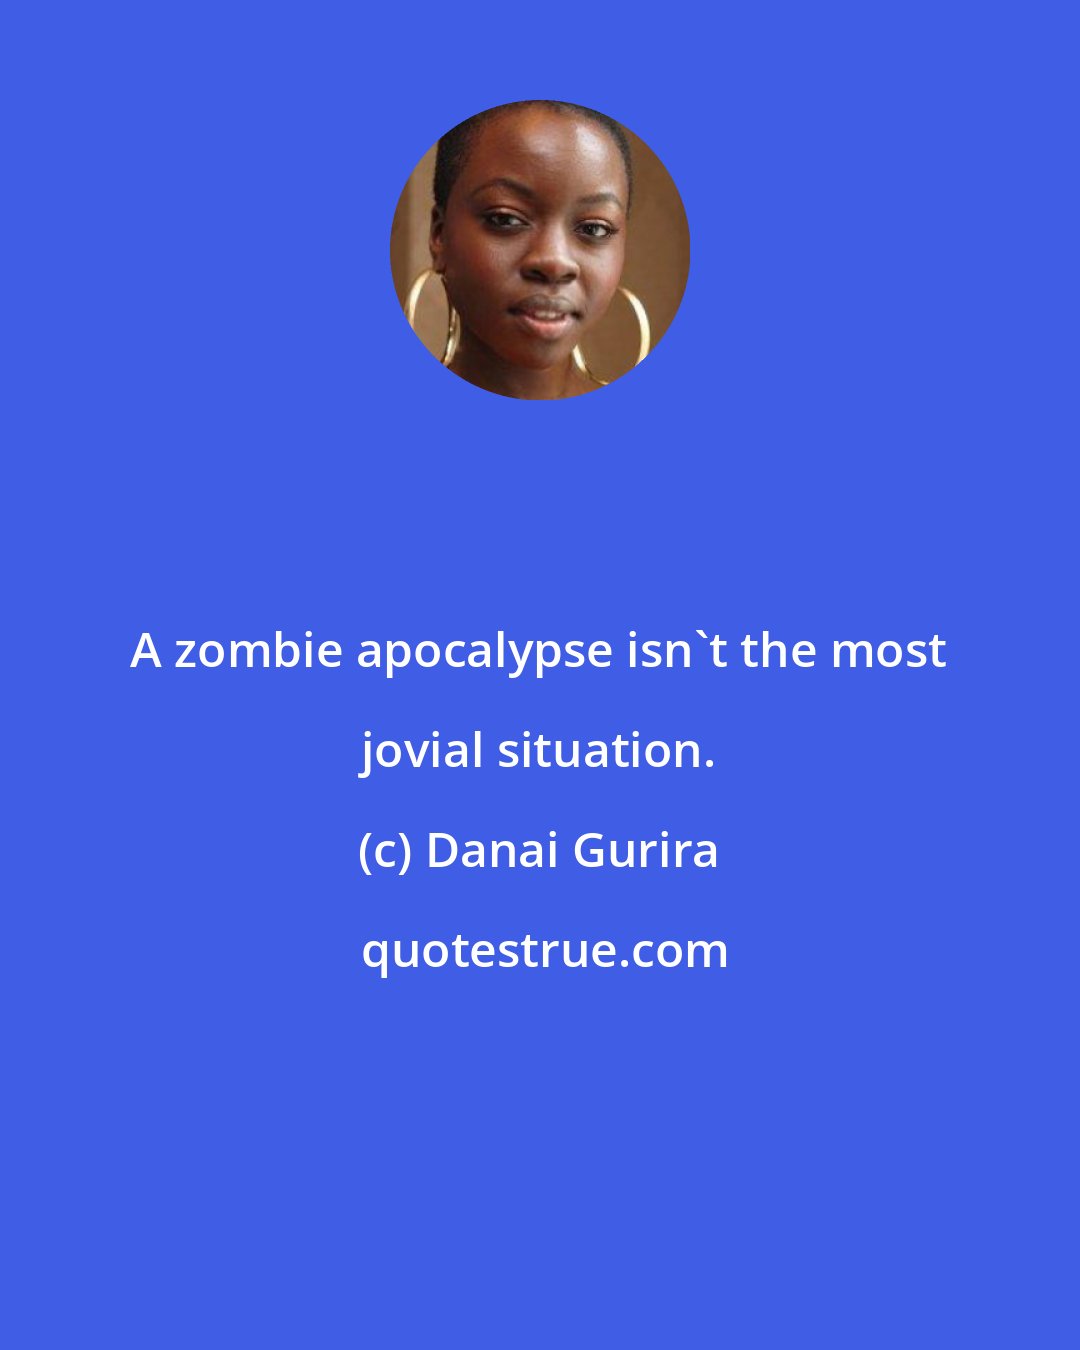 Danai Gurira: A zombie apocalypse isn't the most jovial situation.